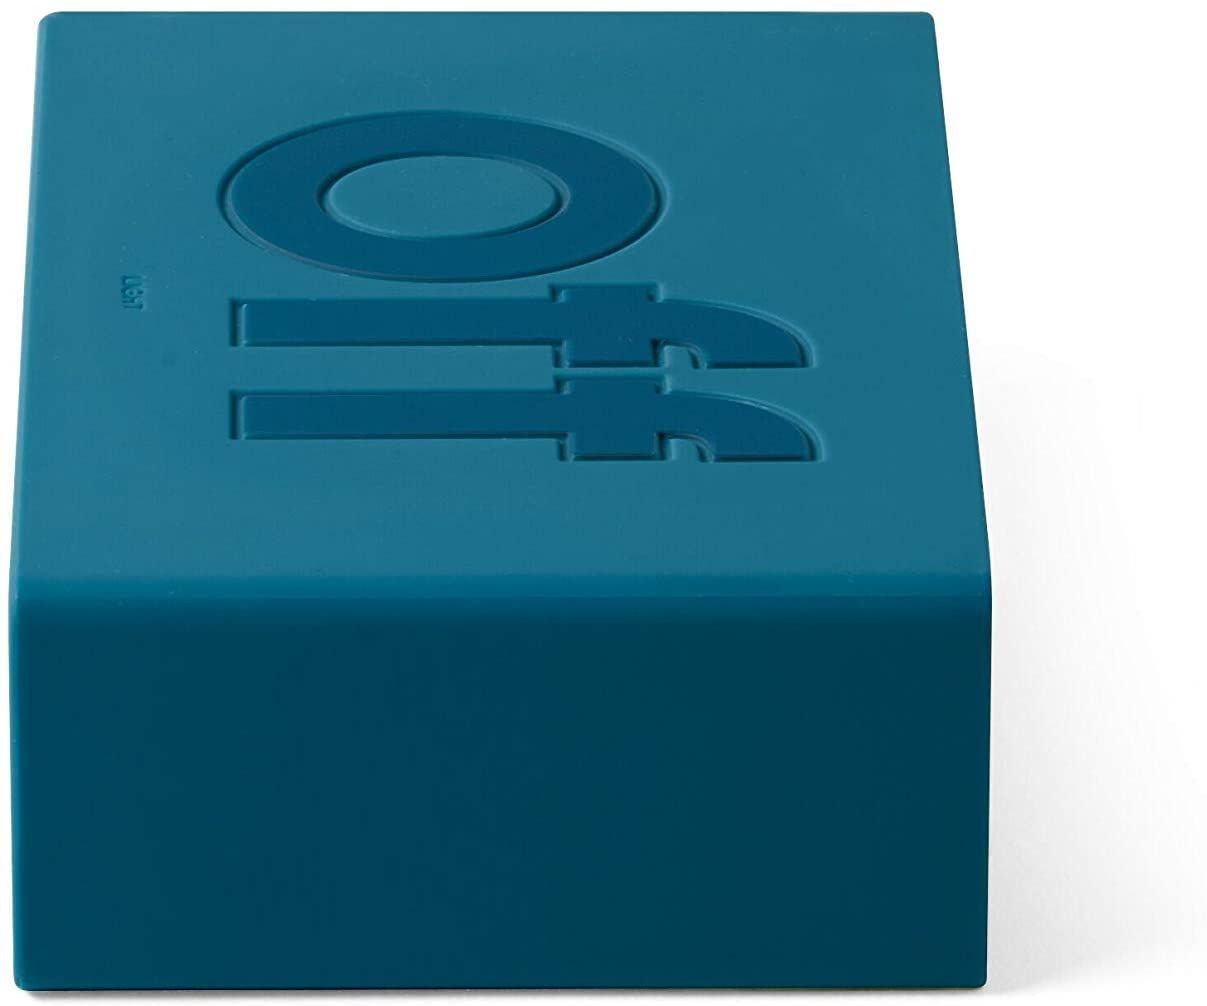 Lexon Flip+ LCD Alarm Clock Rubber Duck Blue